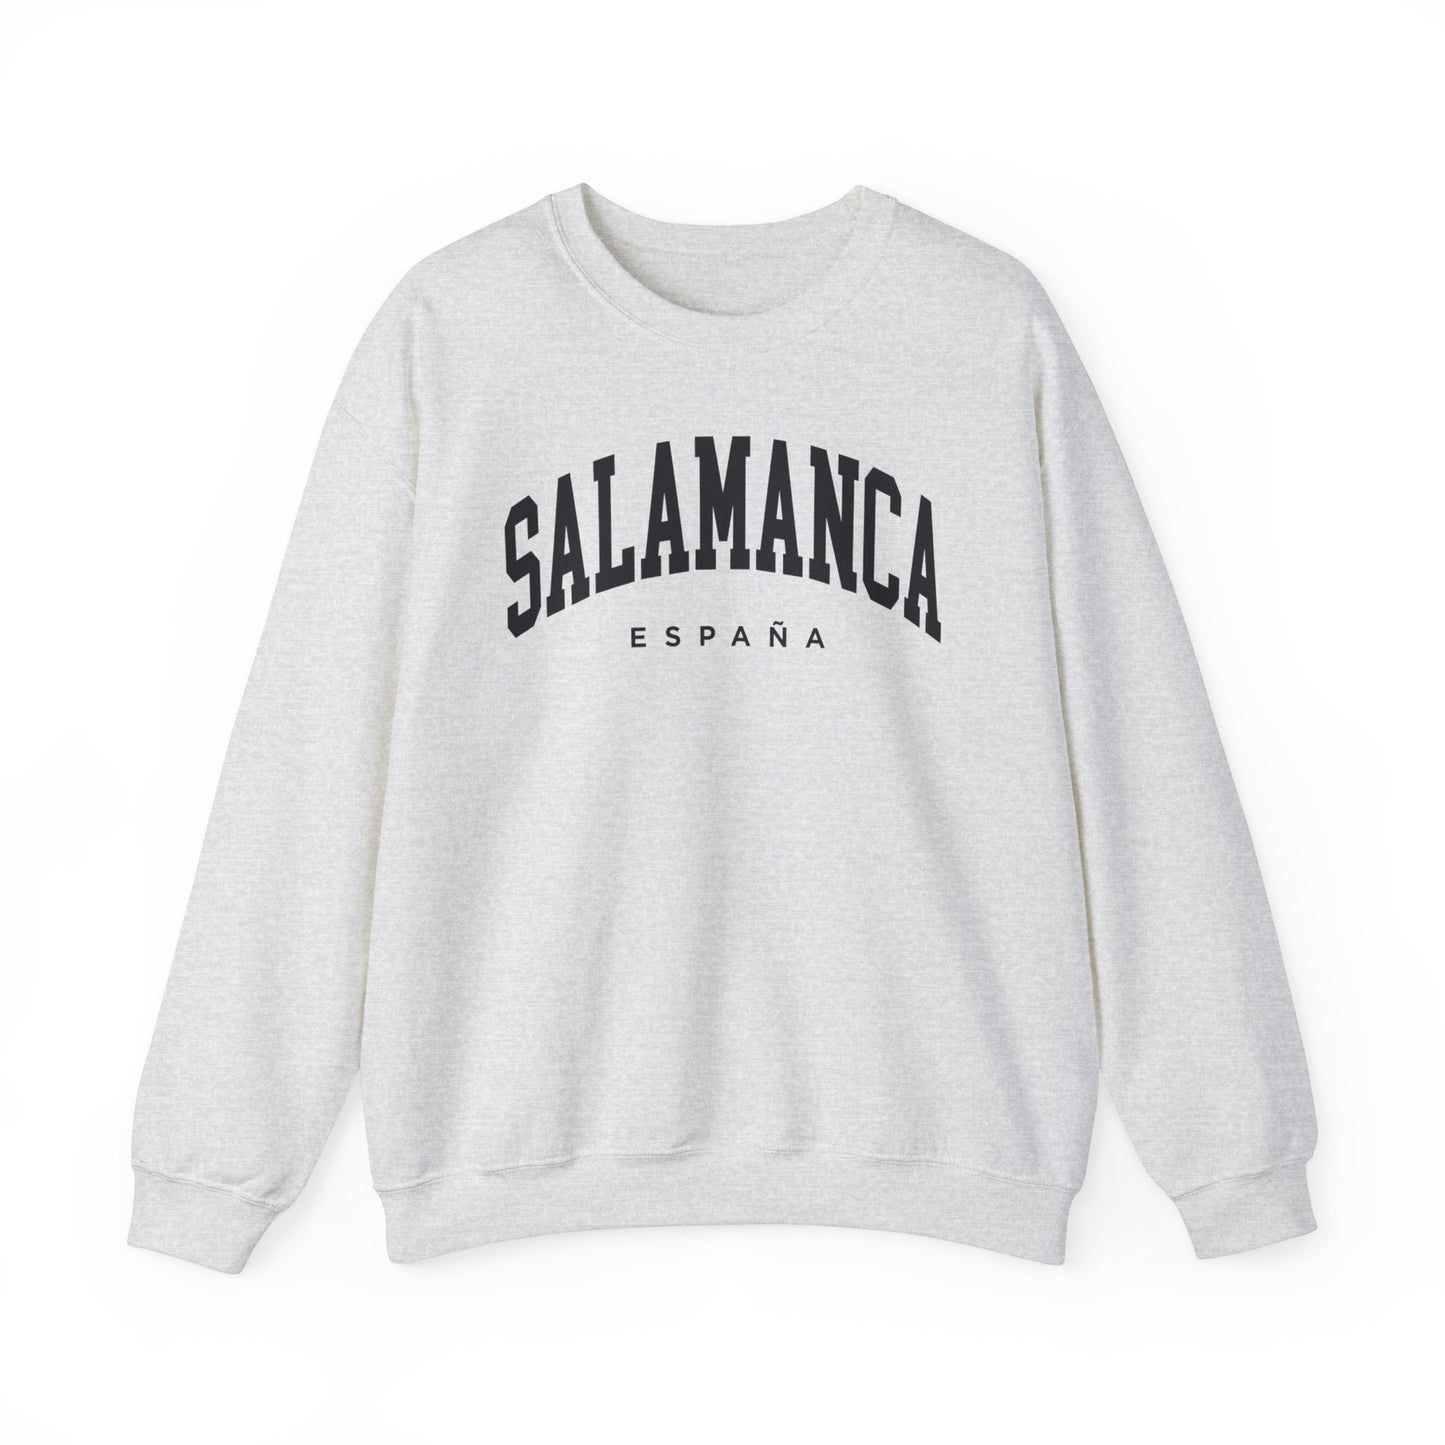 Salamanca Spain Sweatshirt